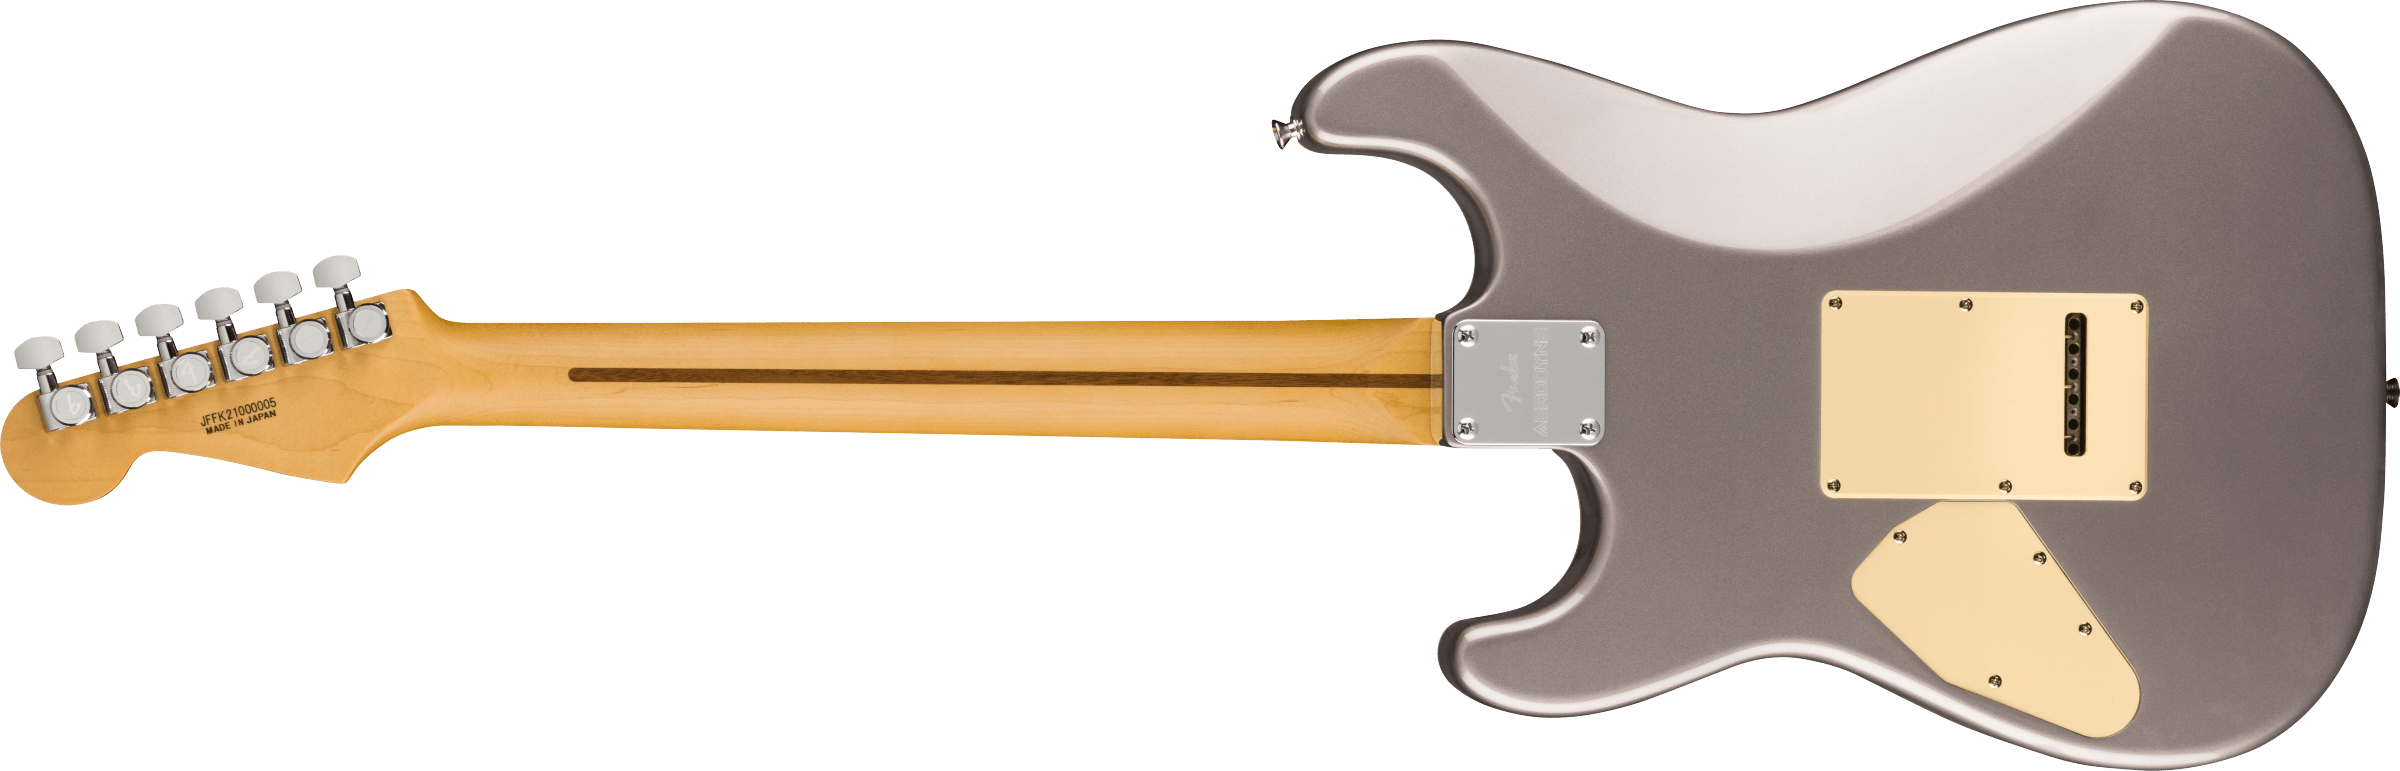 Fender Strat Aerodyne Special Jap Trem Hss Rw - Dolphin Gray Metallic - E-Gitarre in Str-Form - Variation 1